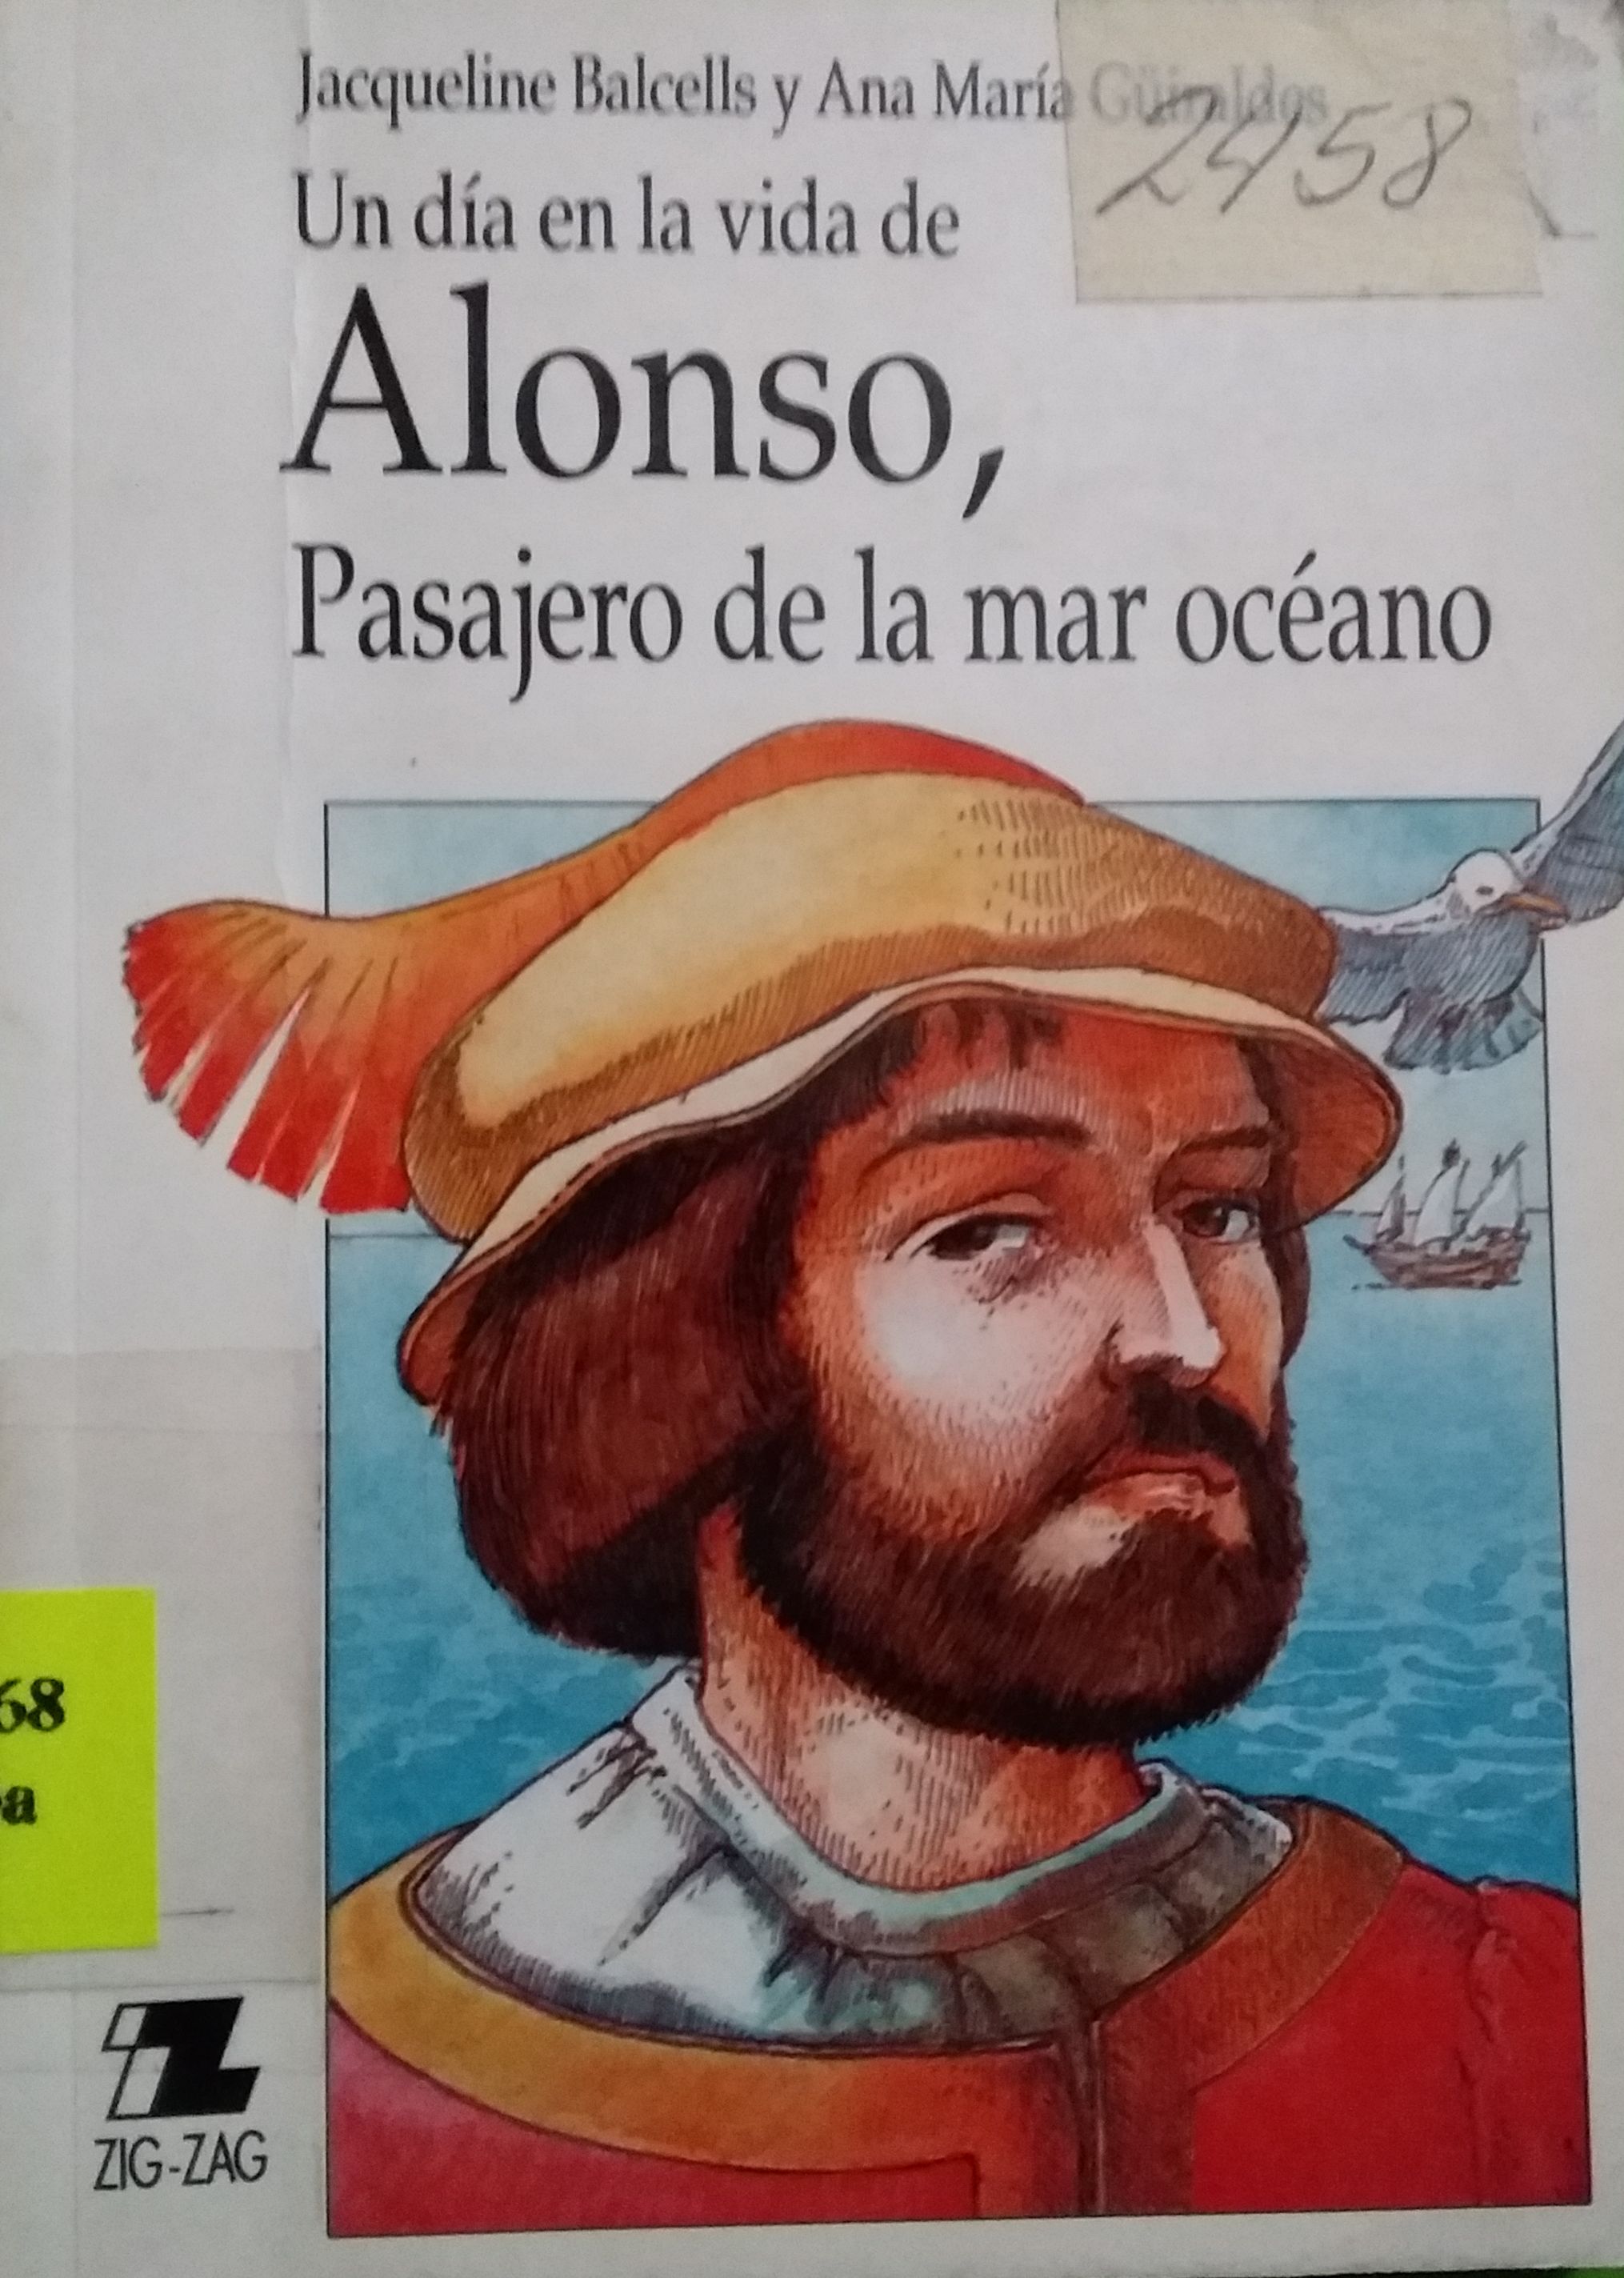 Alonso, Pasajero de la mar océano